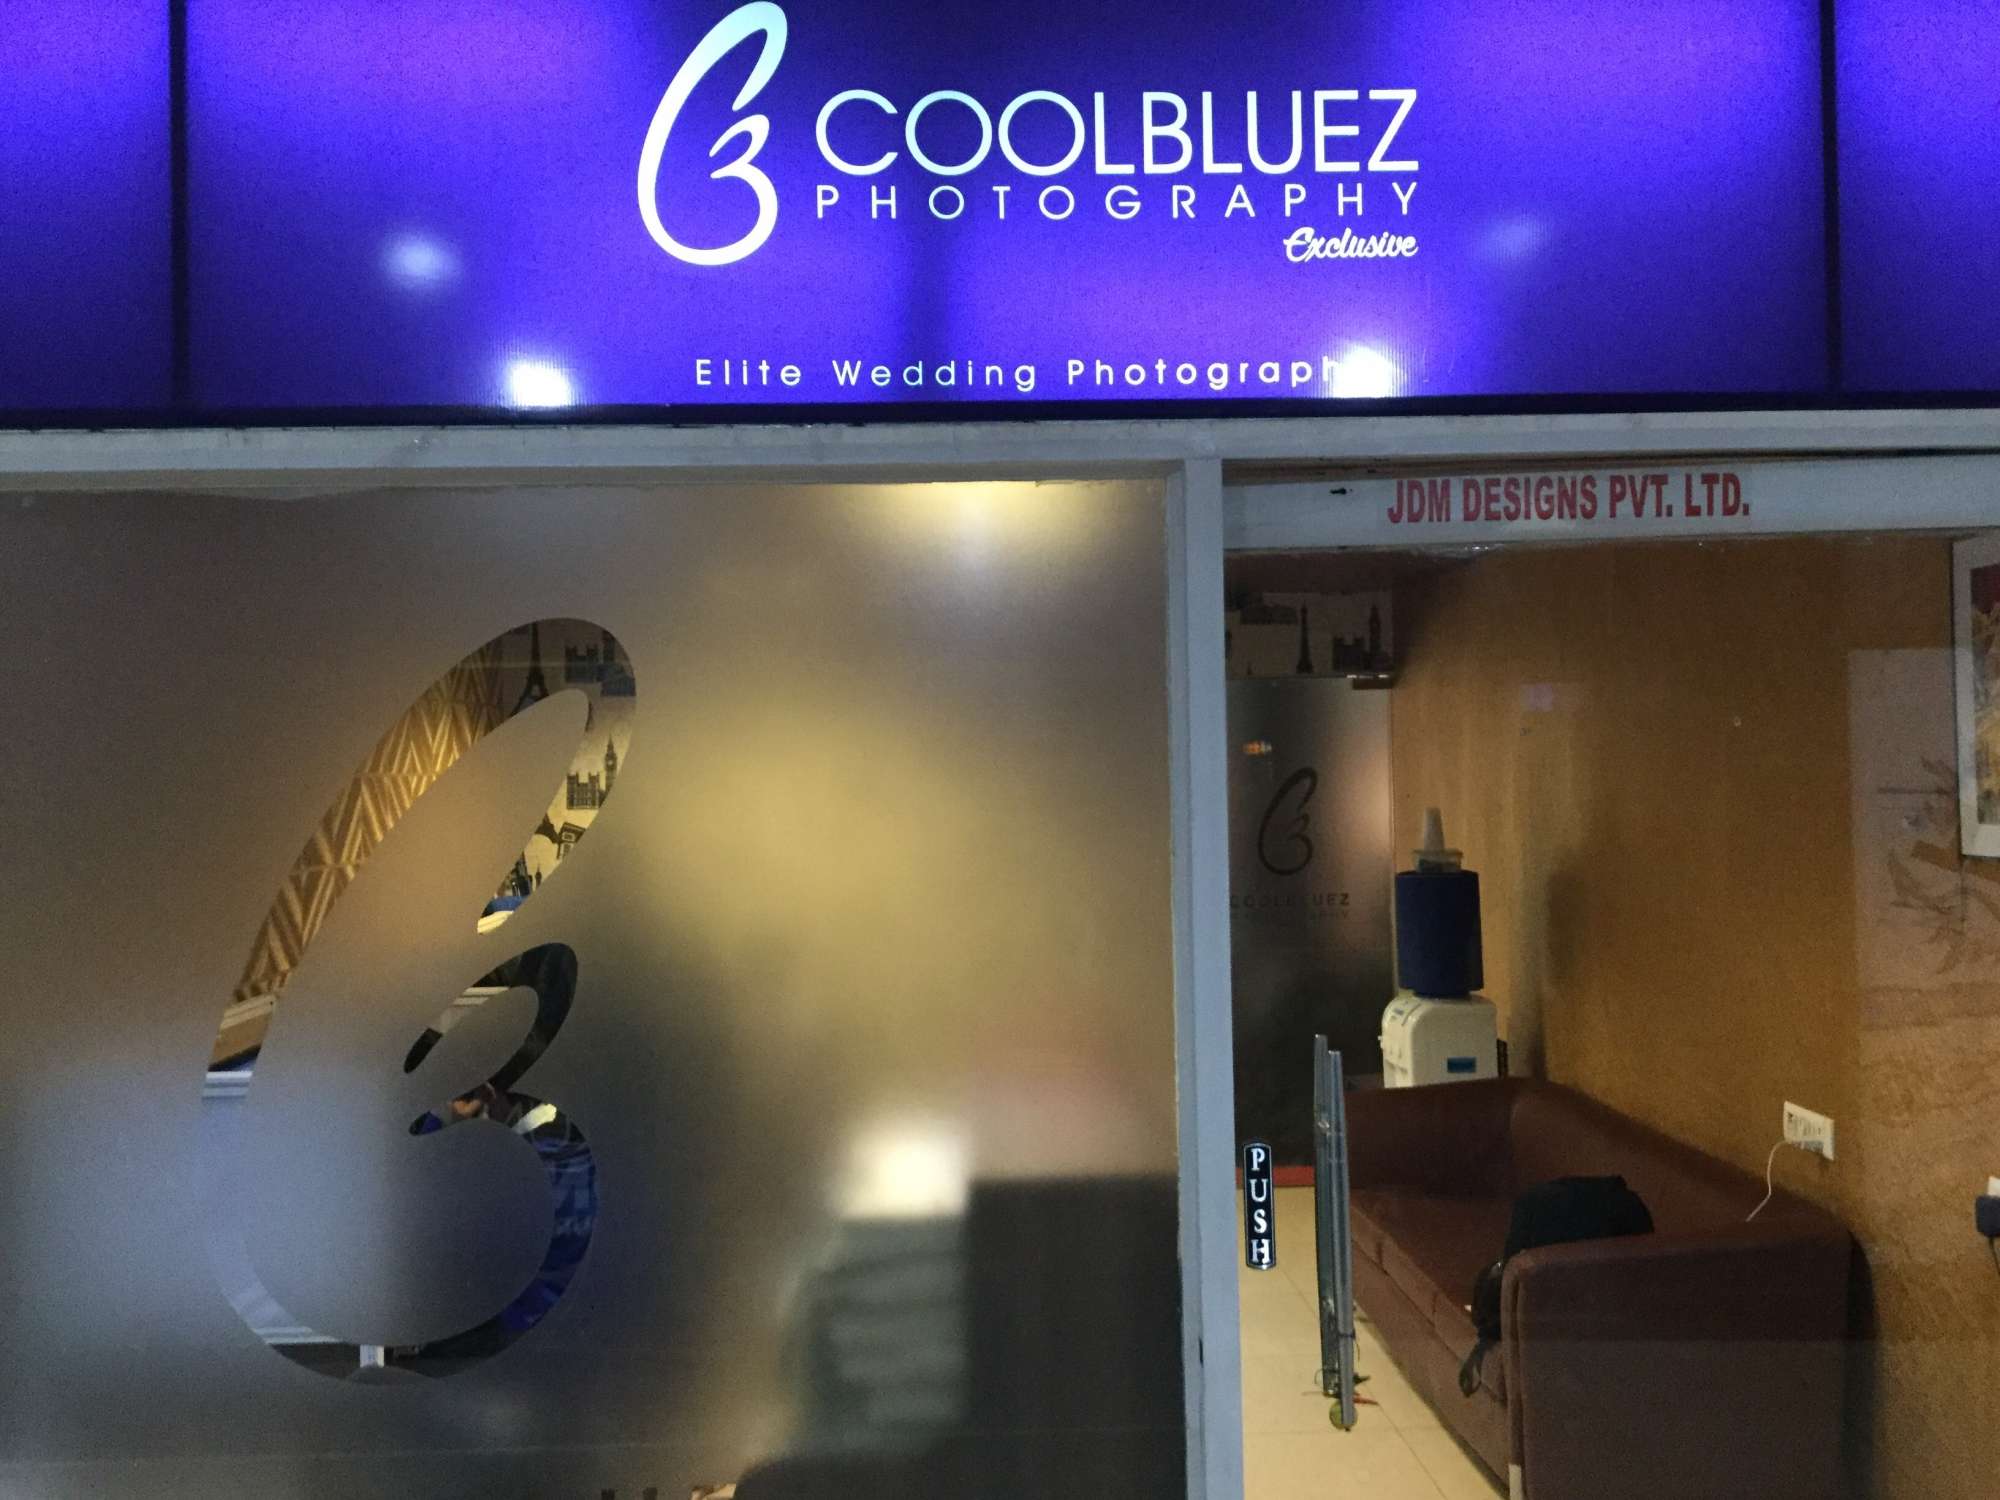 Cool Blue Z Logo - Coolbluez Photography Exclusive Photos, Sector 18, Delhi- Pictures ...